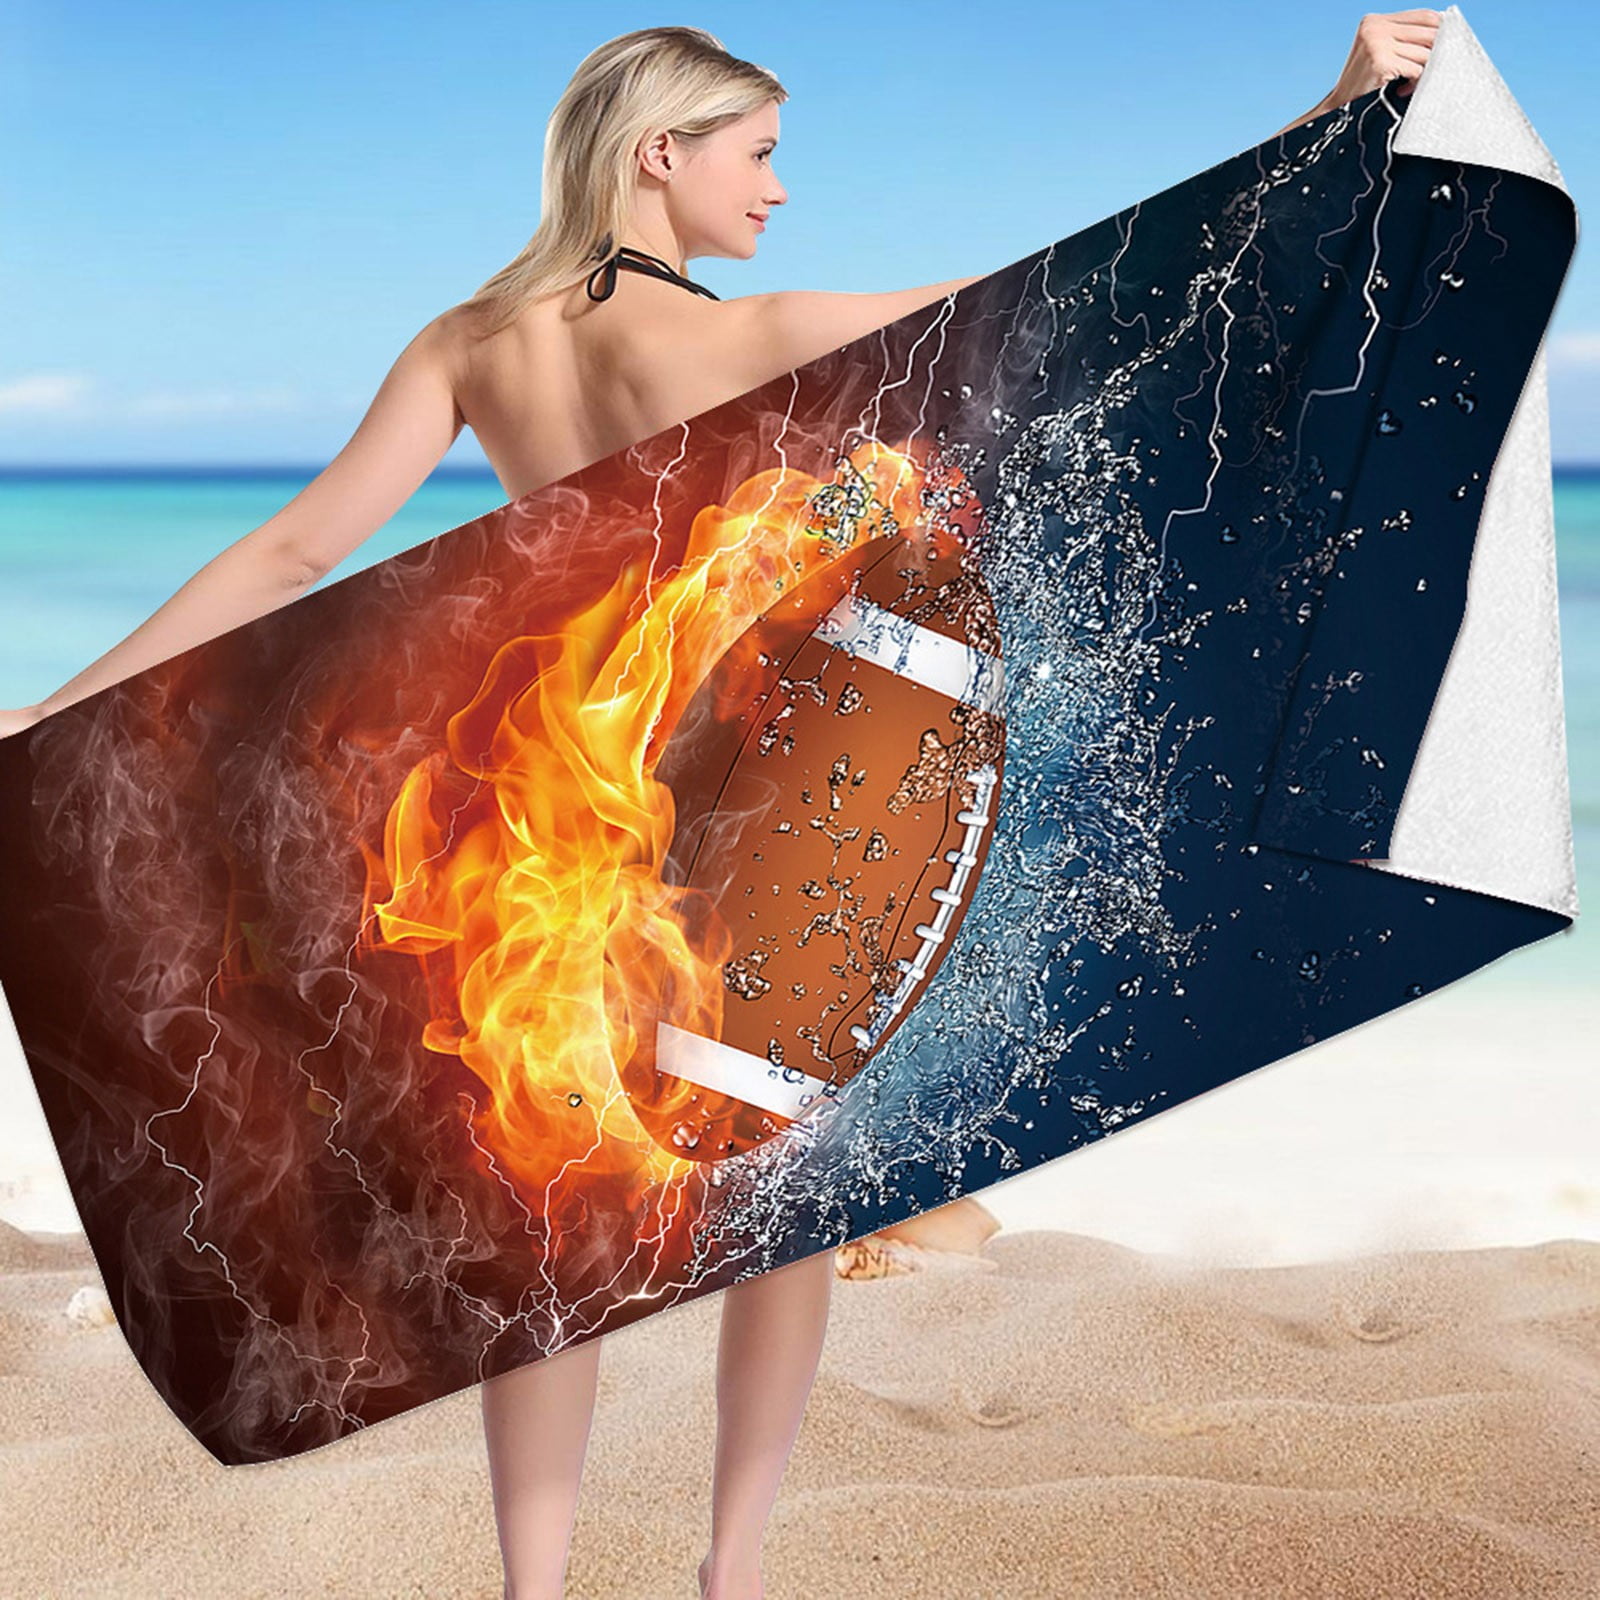 Personalized Custom Printed Swim Beach Towel Super Dry Absorbent Microfiber 